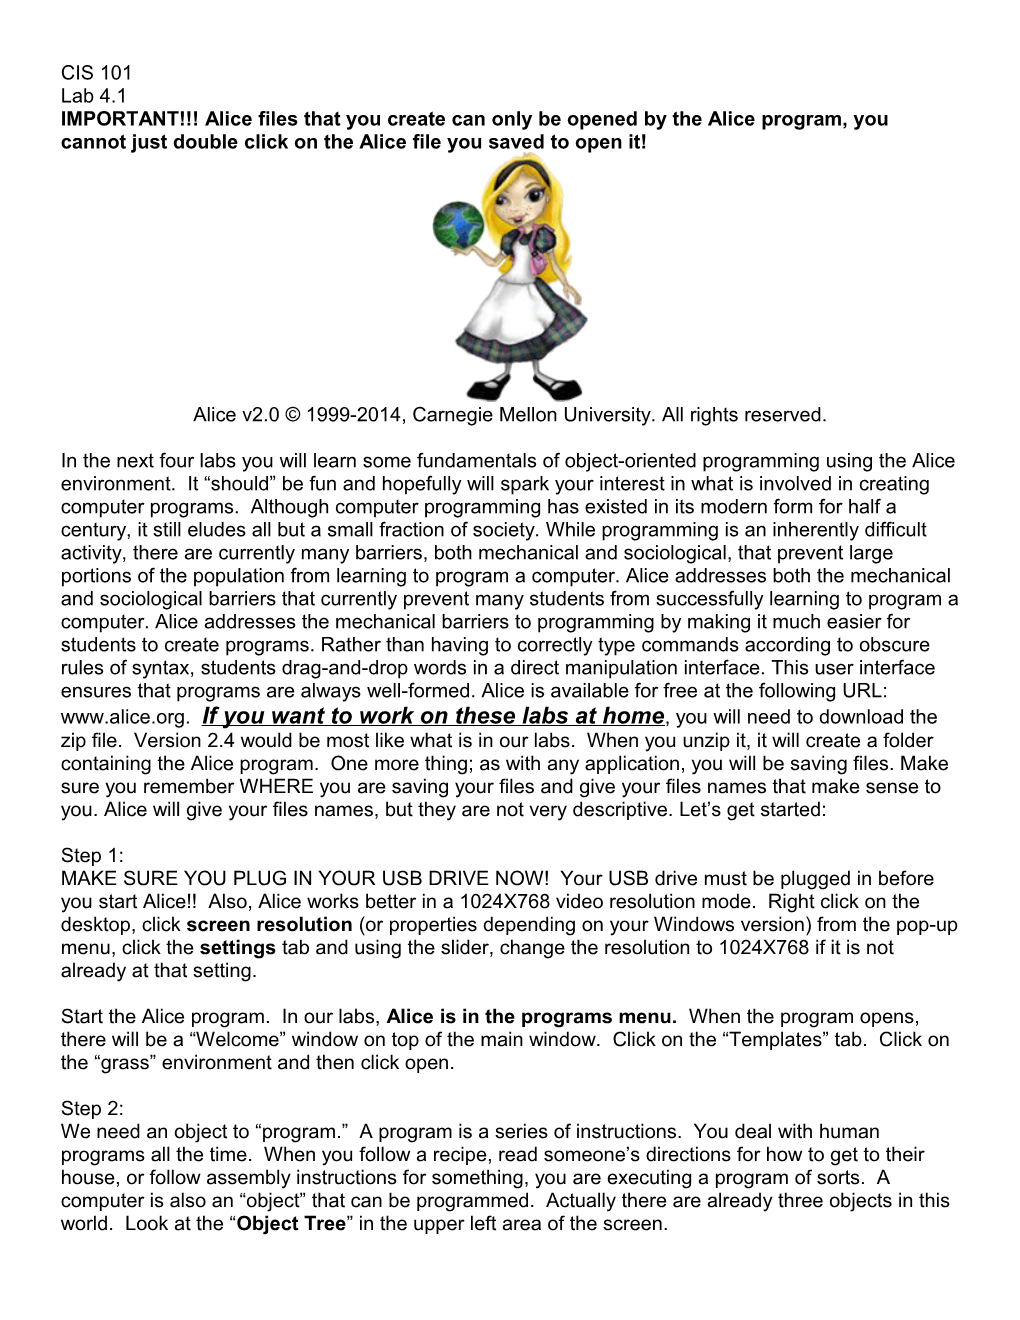 Alice V2.0 1999-2014, Carnegie Mellon University. All Rights Reserved